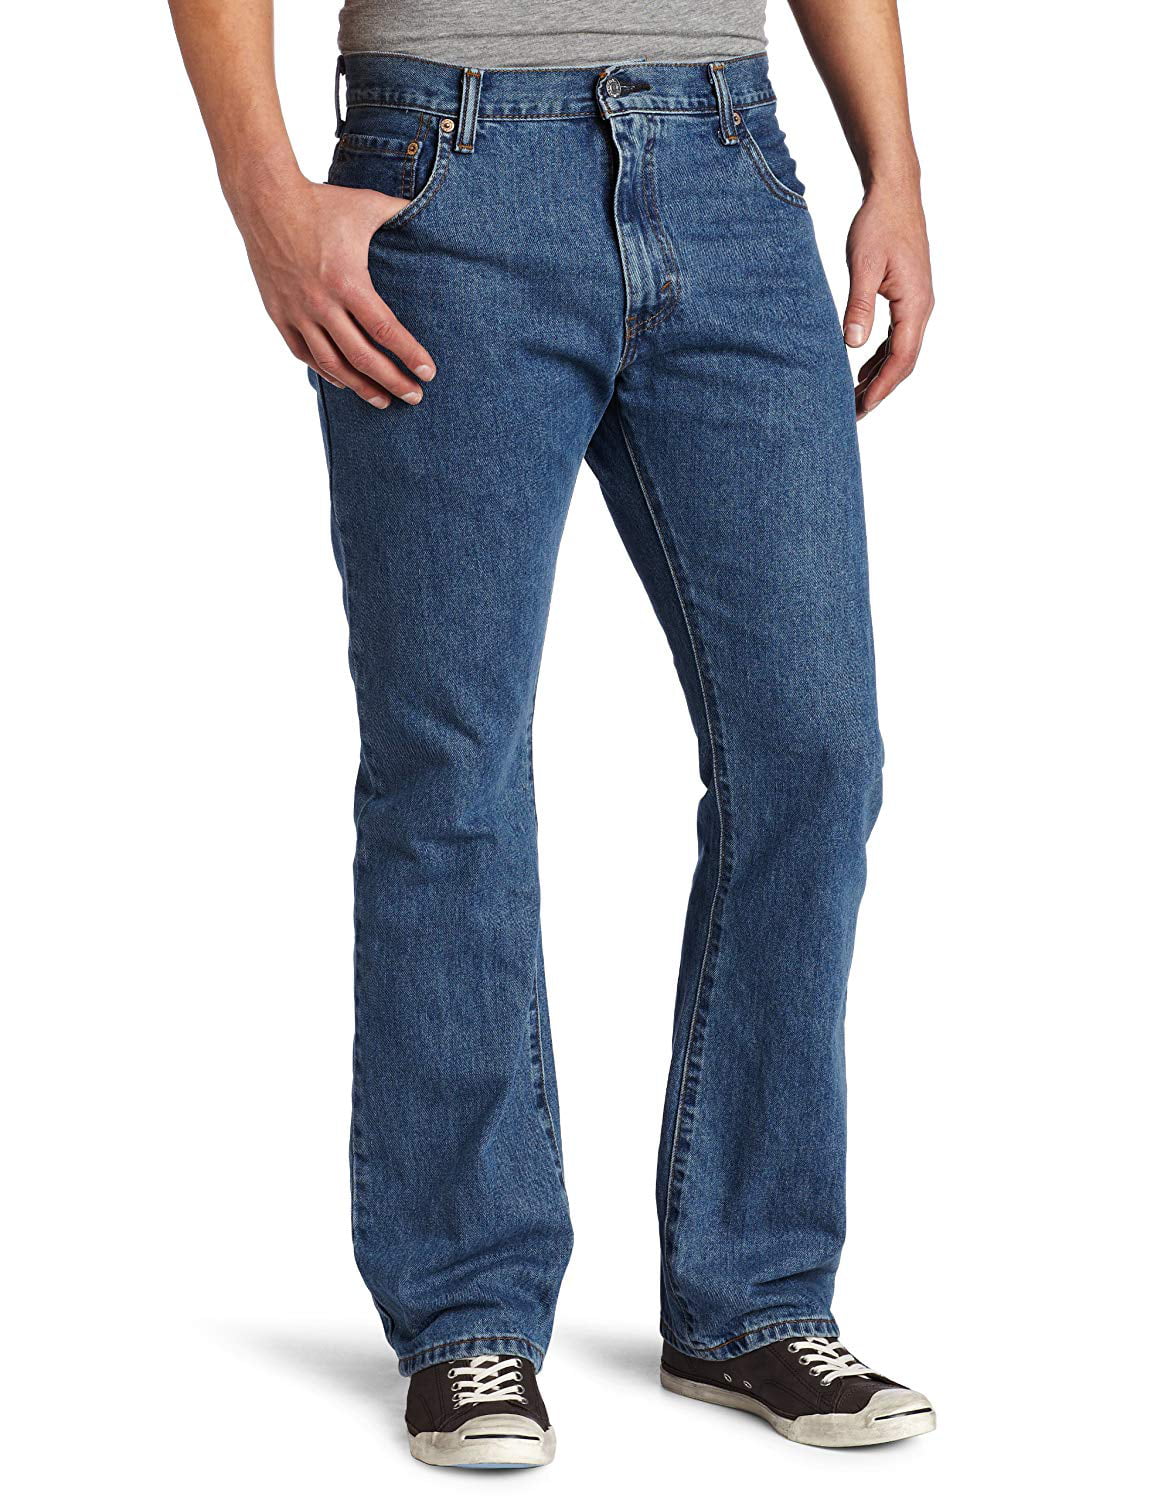 Levi's Men's 517 Boot Cut Jean, Medium Stonewash, 34x30 | Walmart Canada